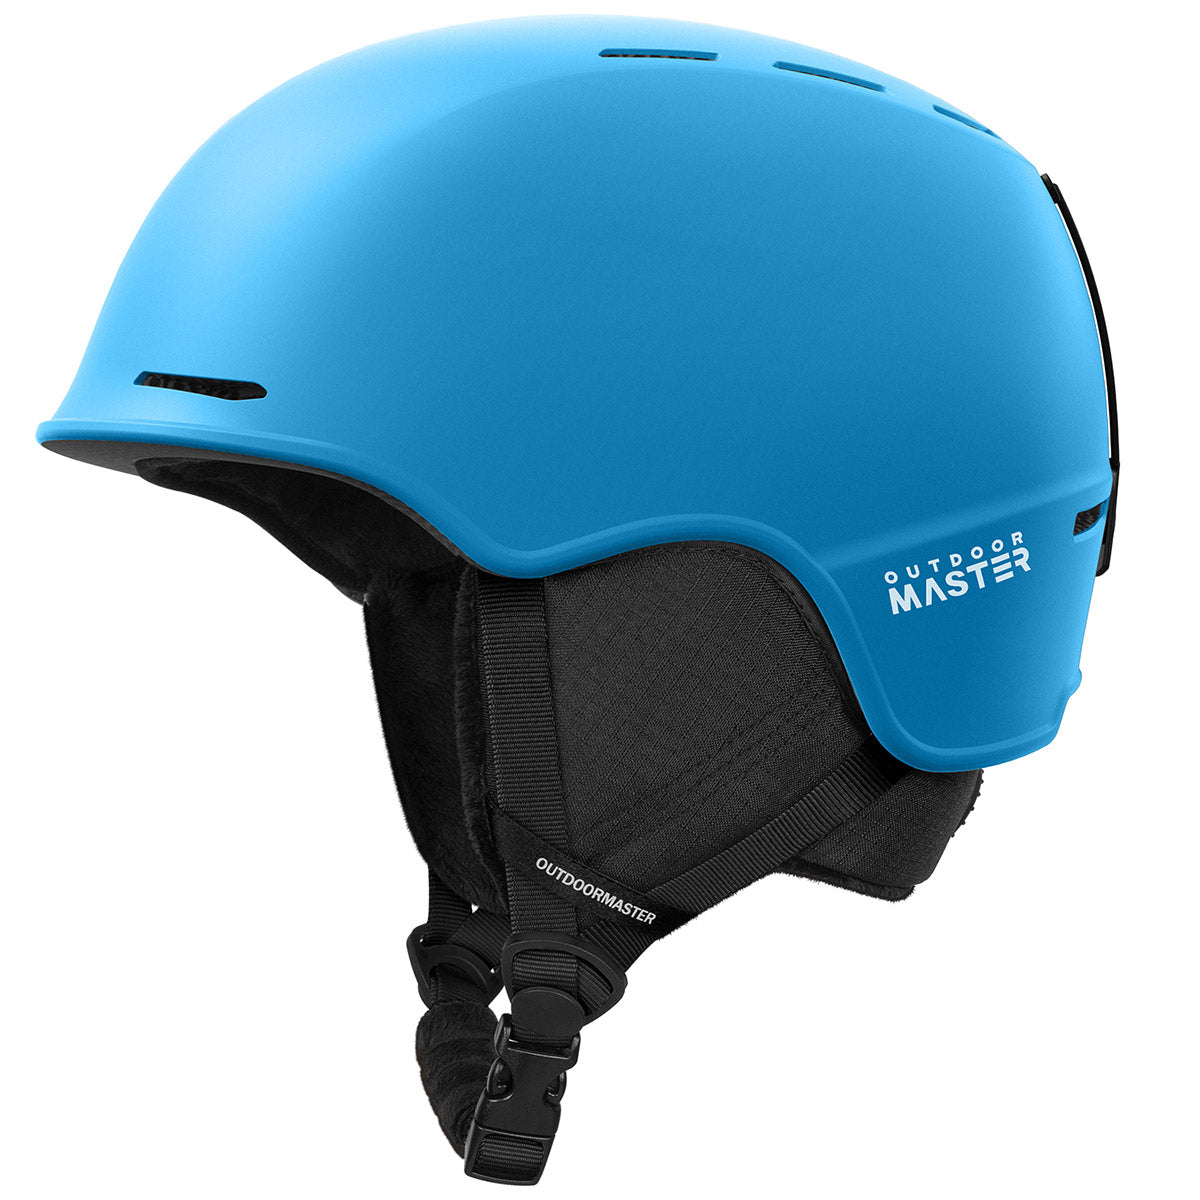 Lazurite Snow Helmet